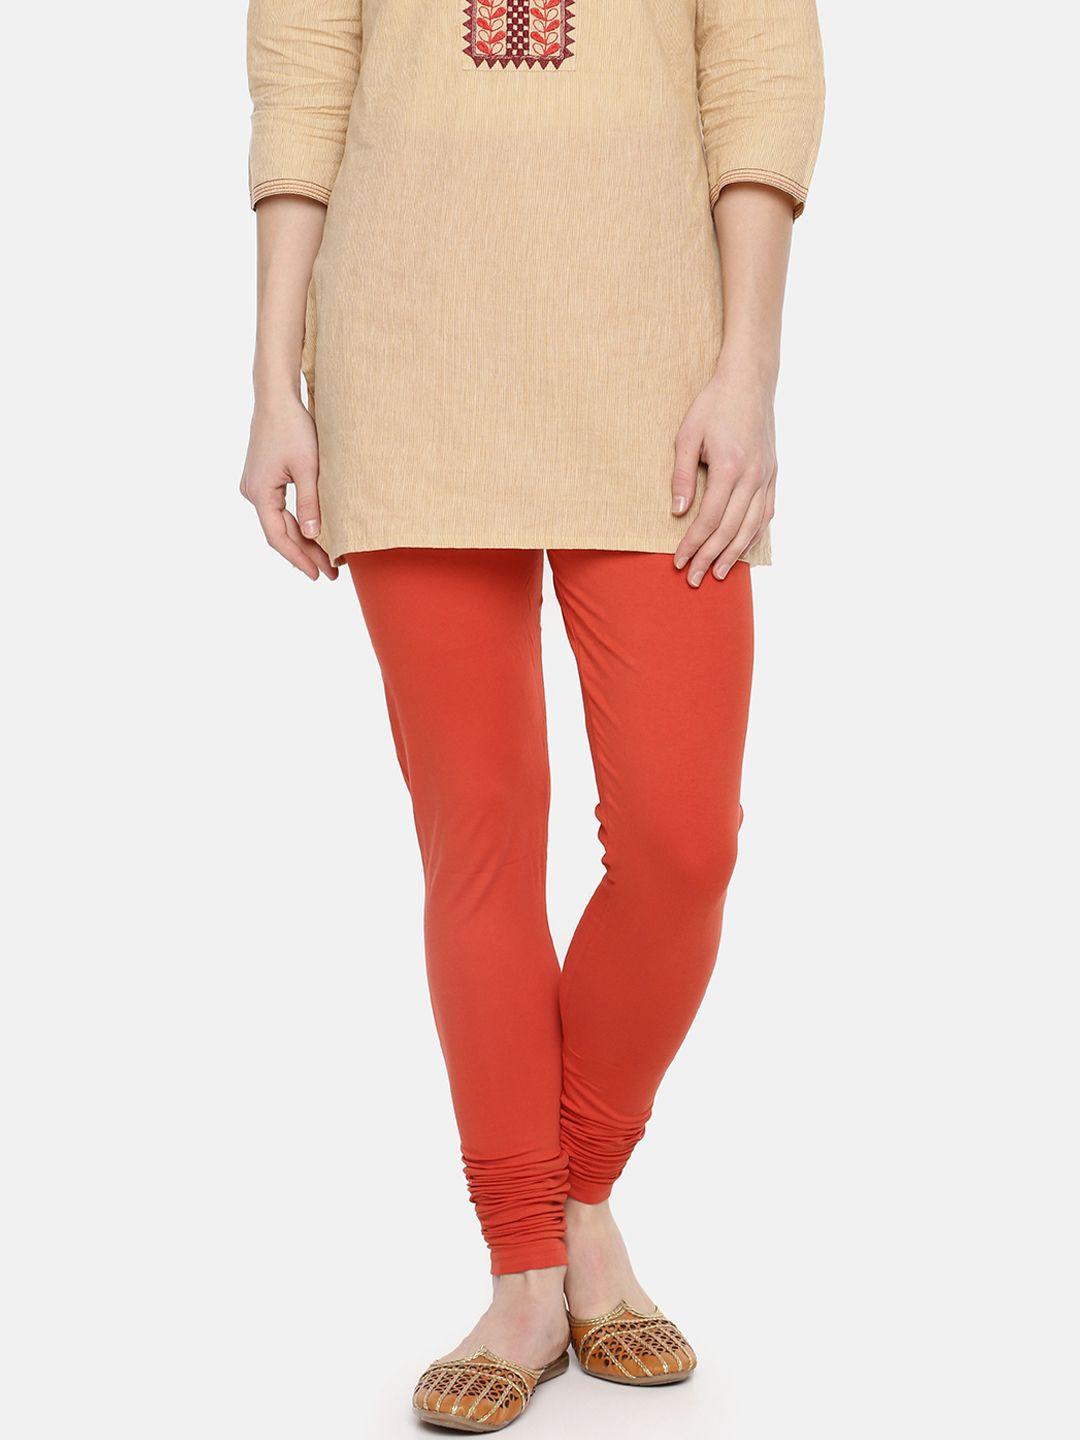 dollar missy women coral red solid churidar length leggings